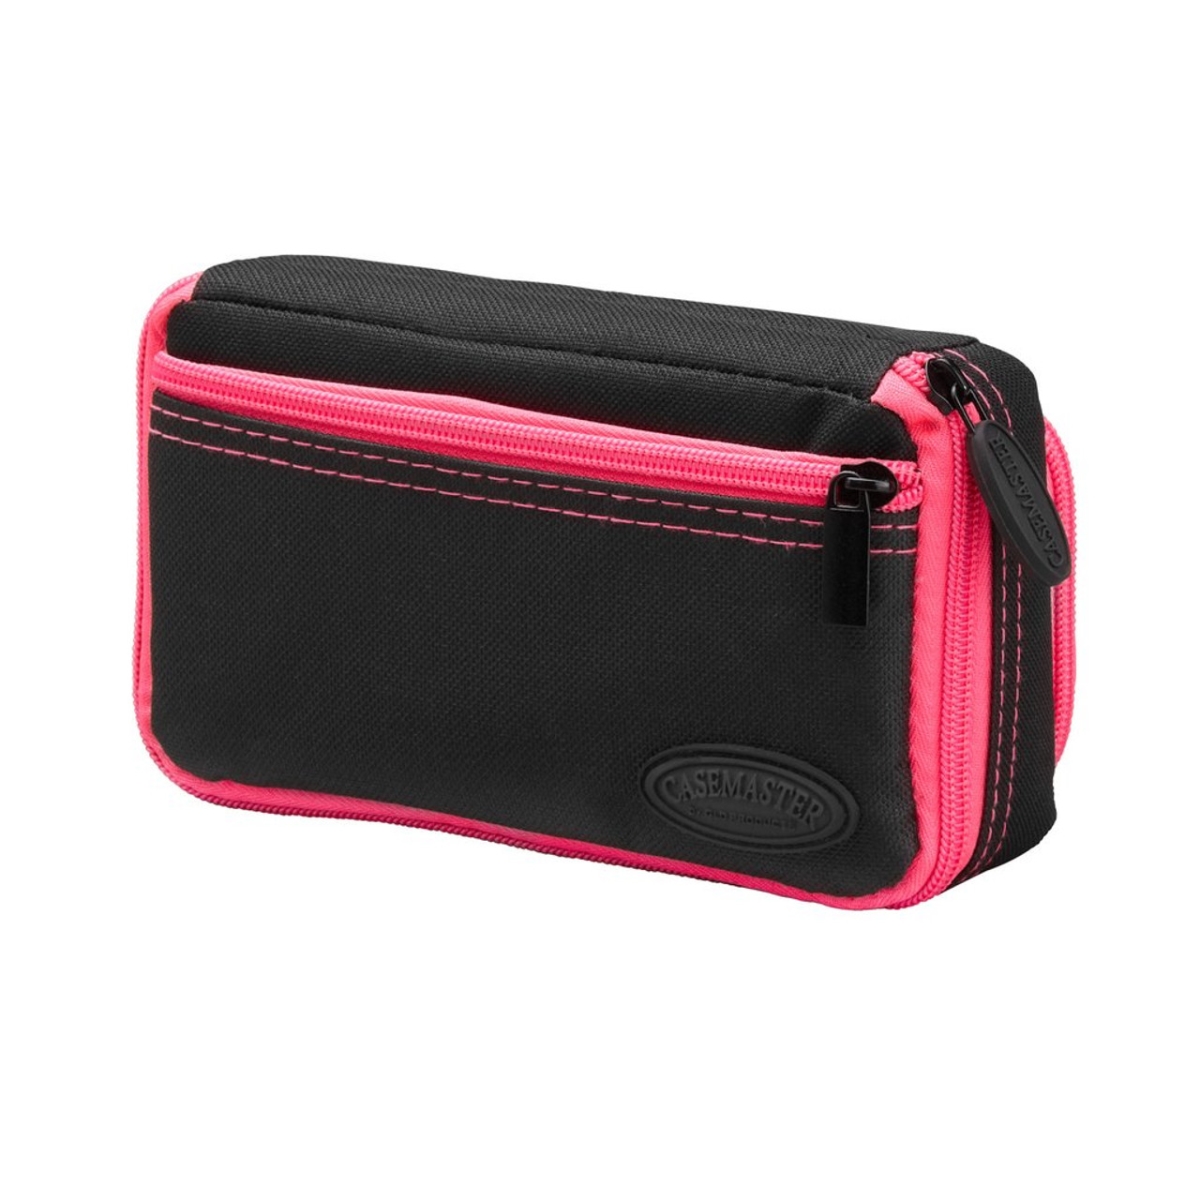 Picture of Casemaster 36-0701-12 Plazma Plus Dart Case with Zipper & Phone Pocket&#44; Black & Pink - 3 Darts